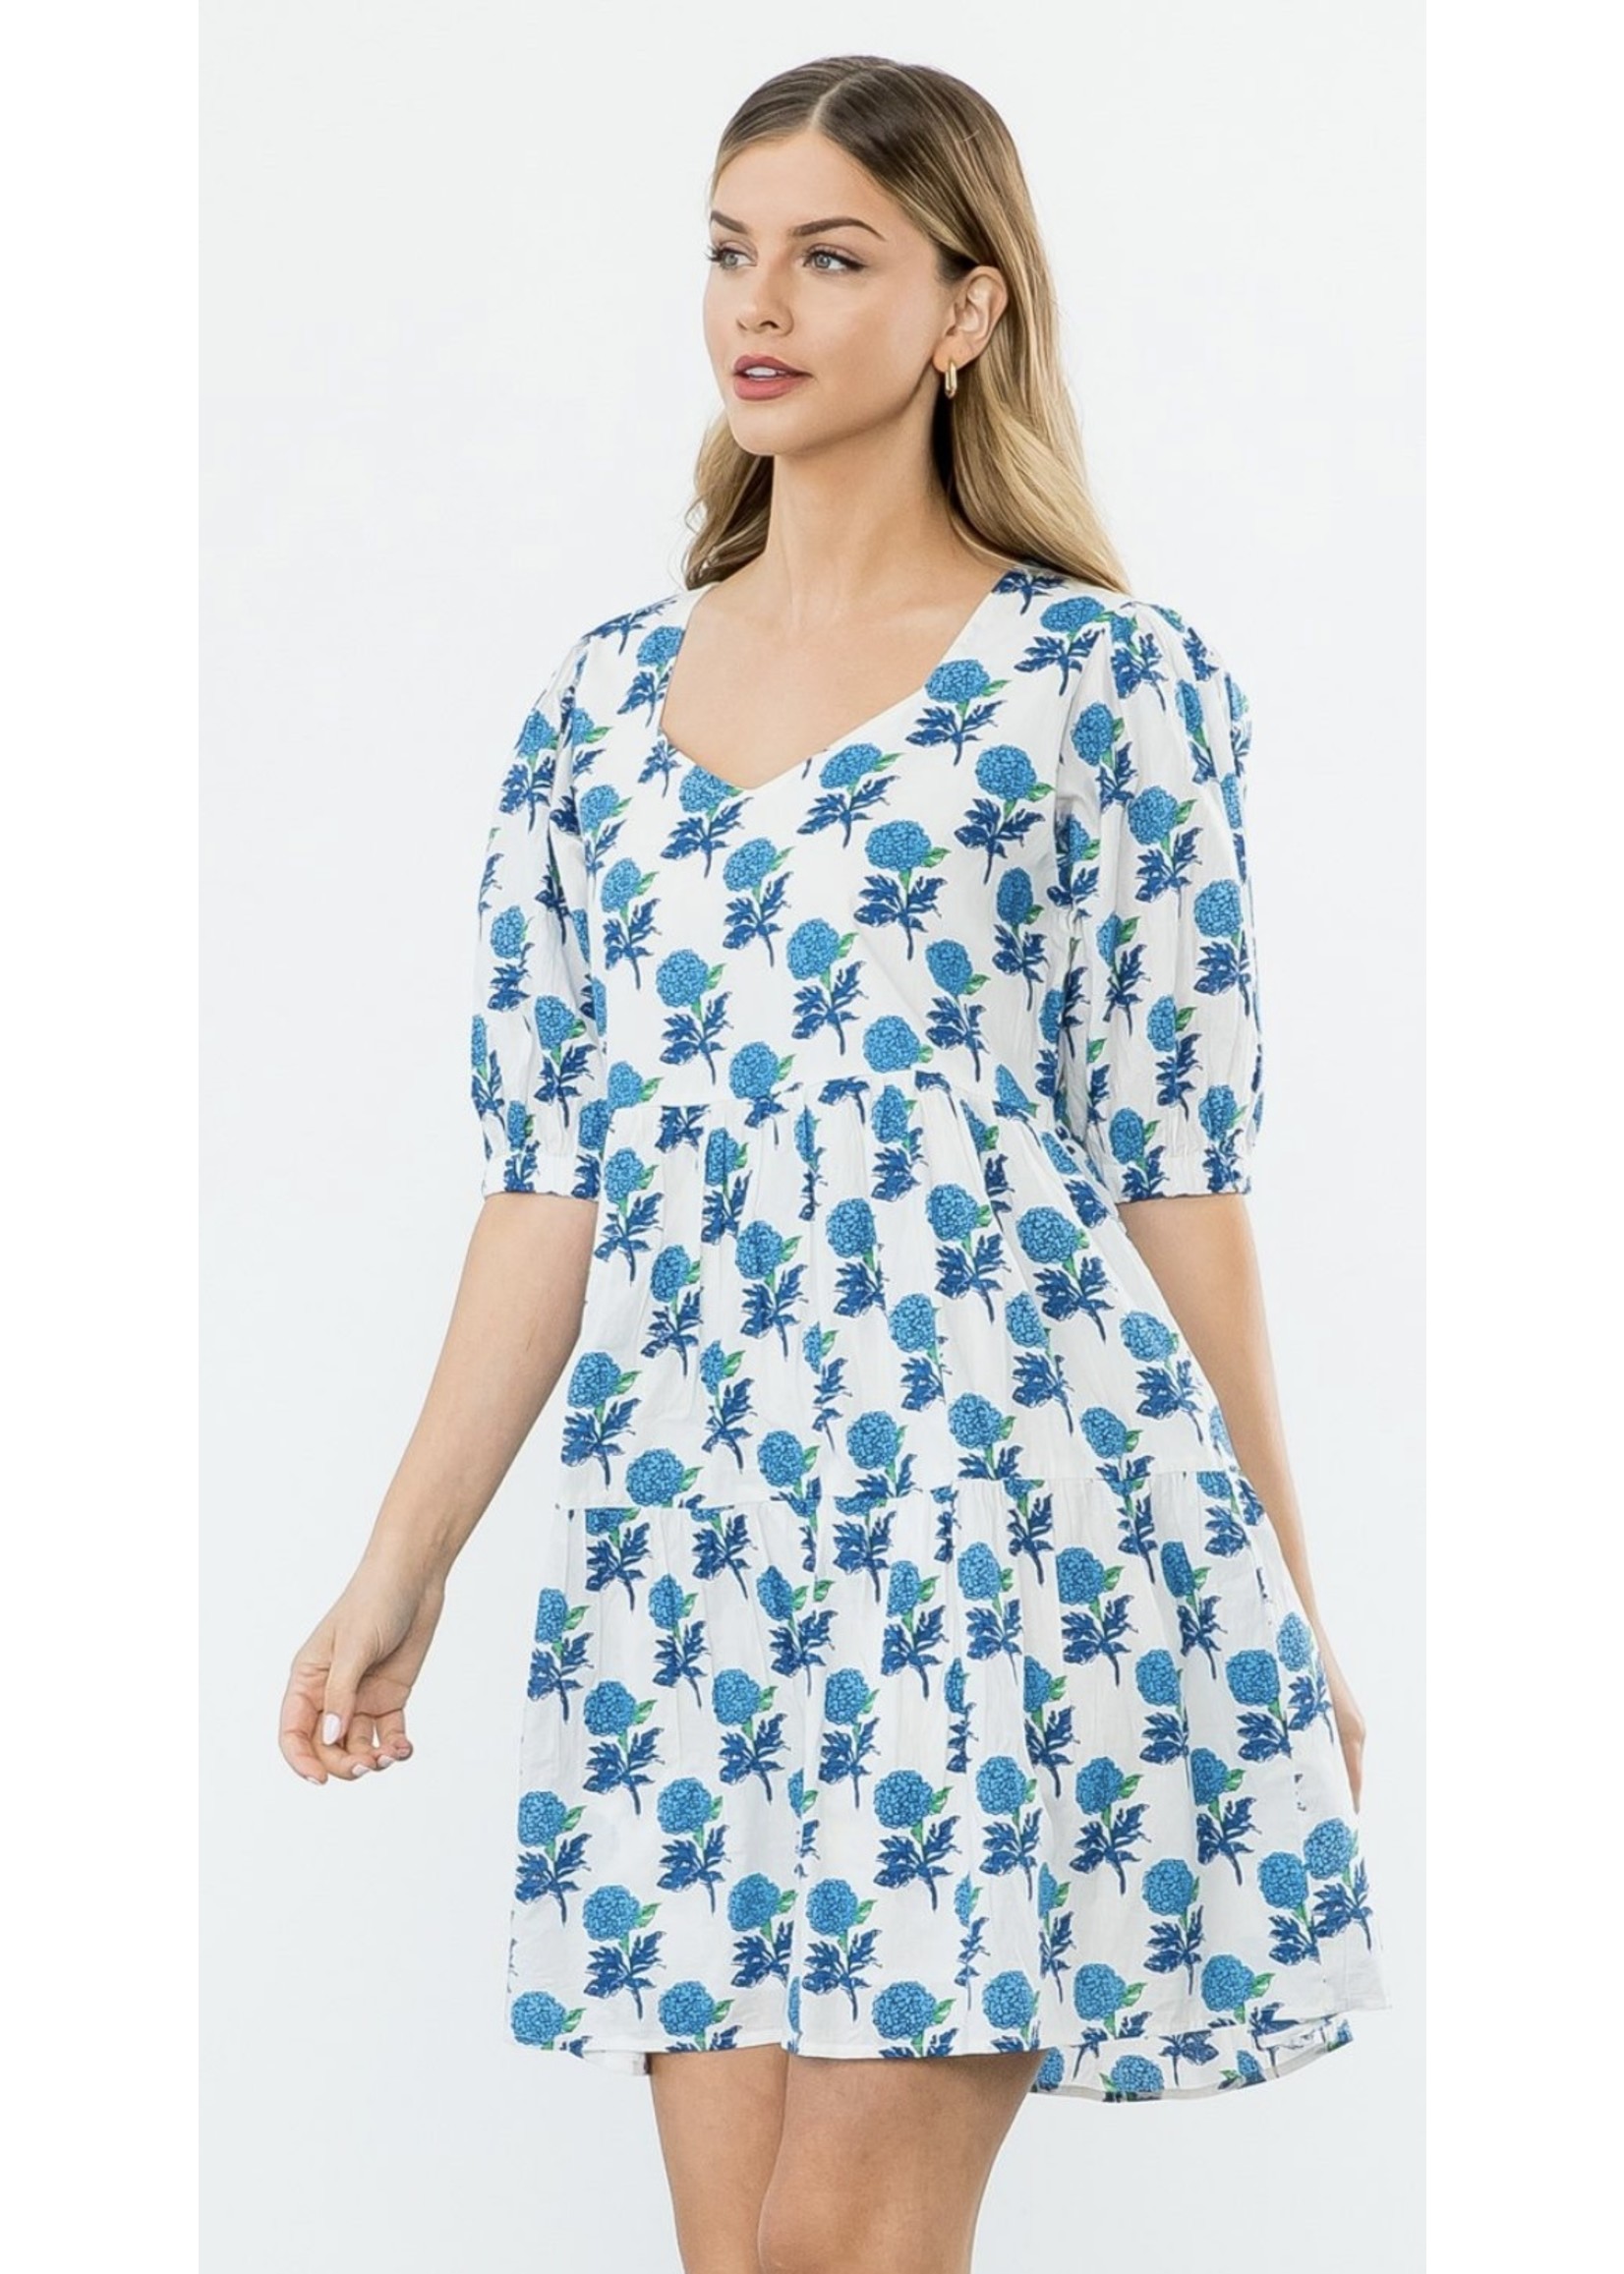 Flower Pattern S/S Dress - Blue/White